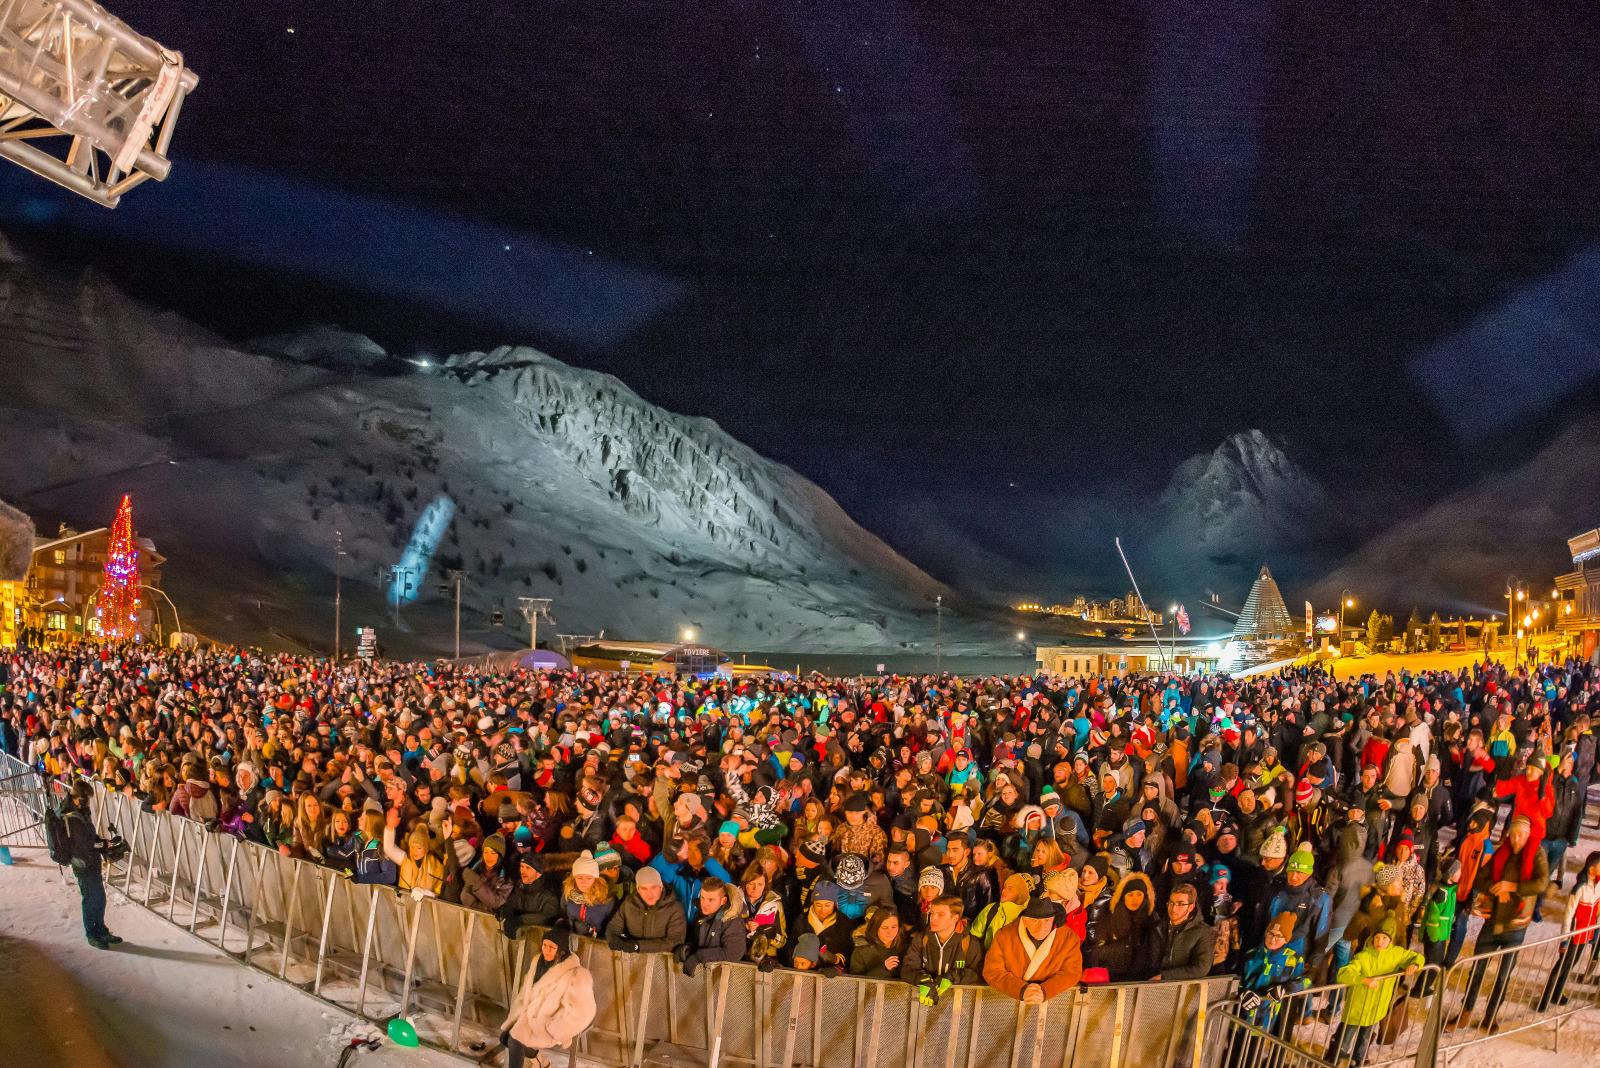 Big crowd of skiiers enjoying Apres party at night